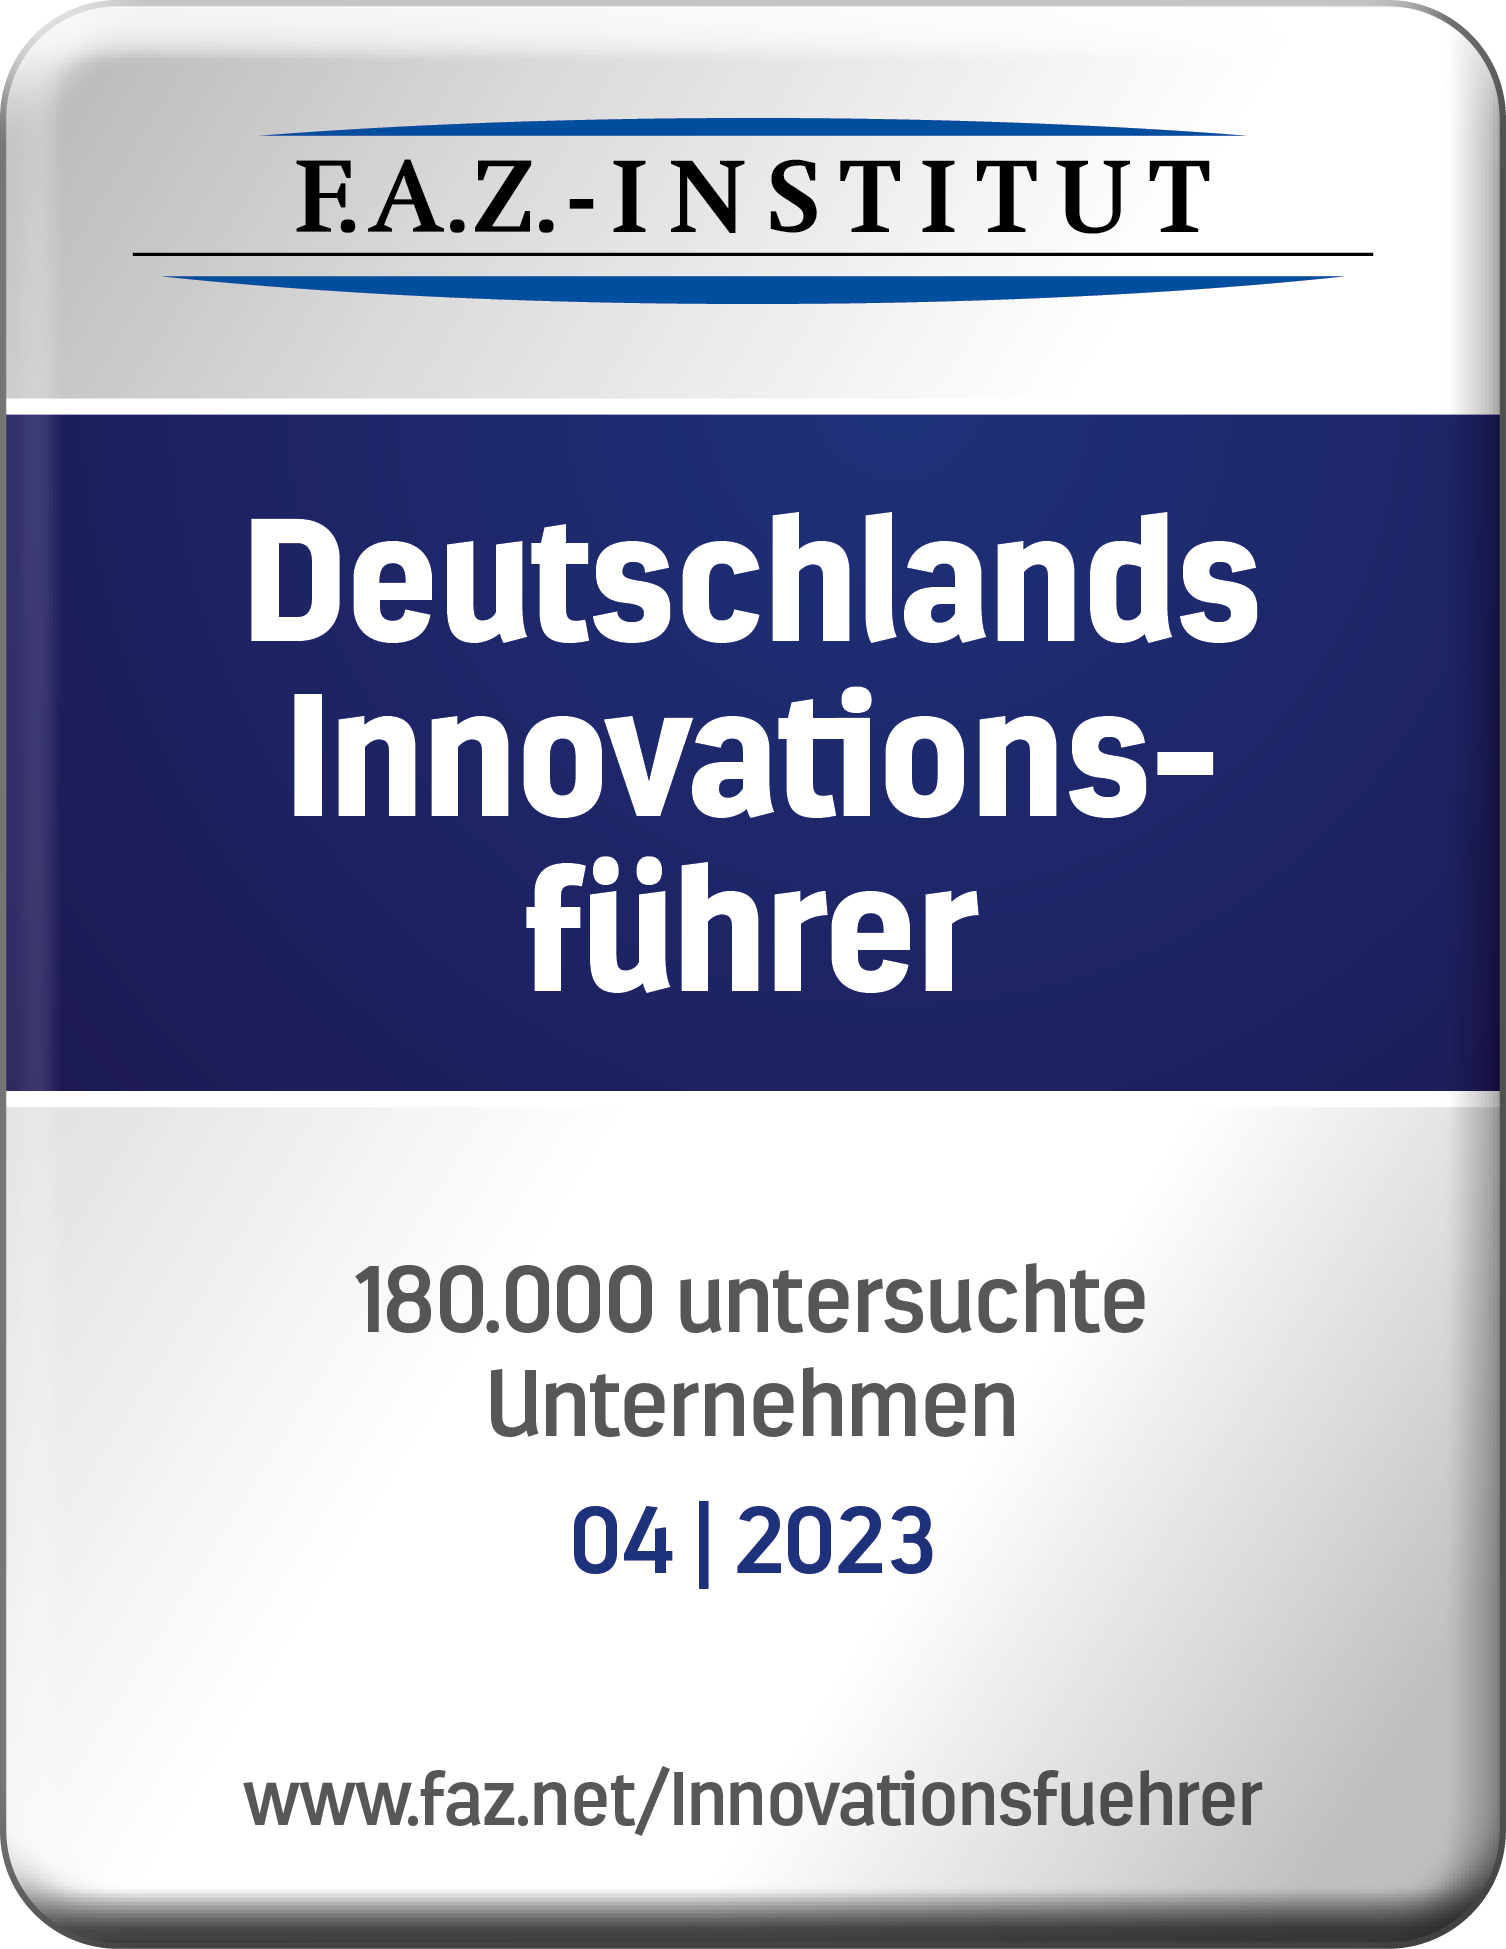 FAZ-Insititut - Germany's Innovation Leader 2023